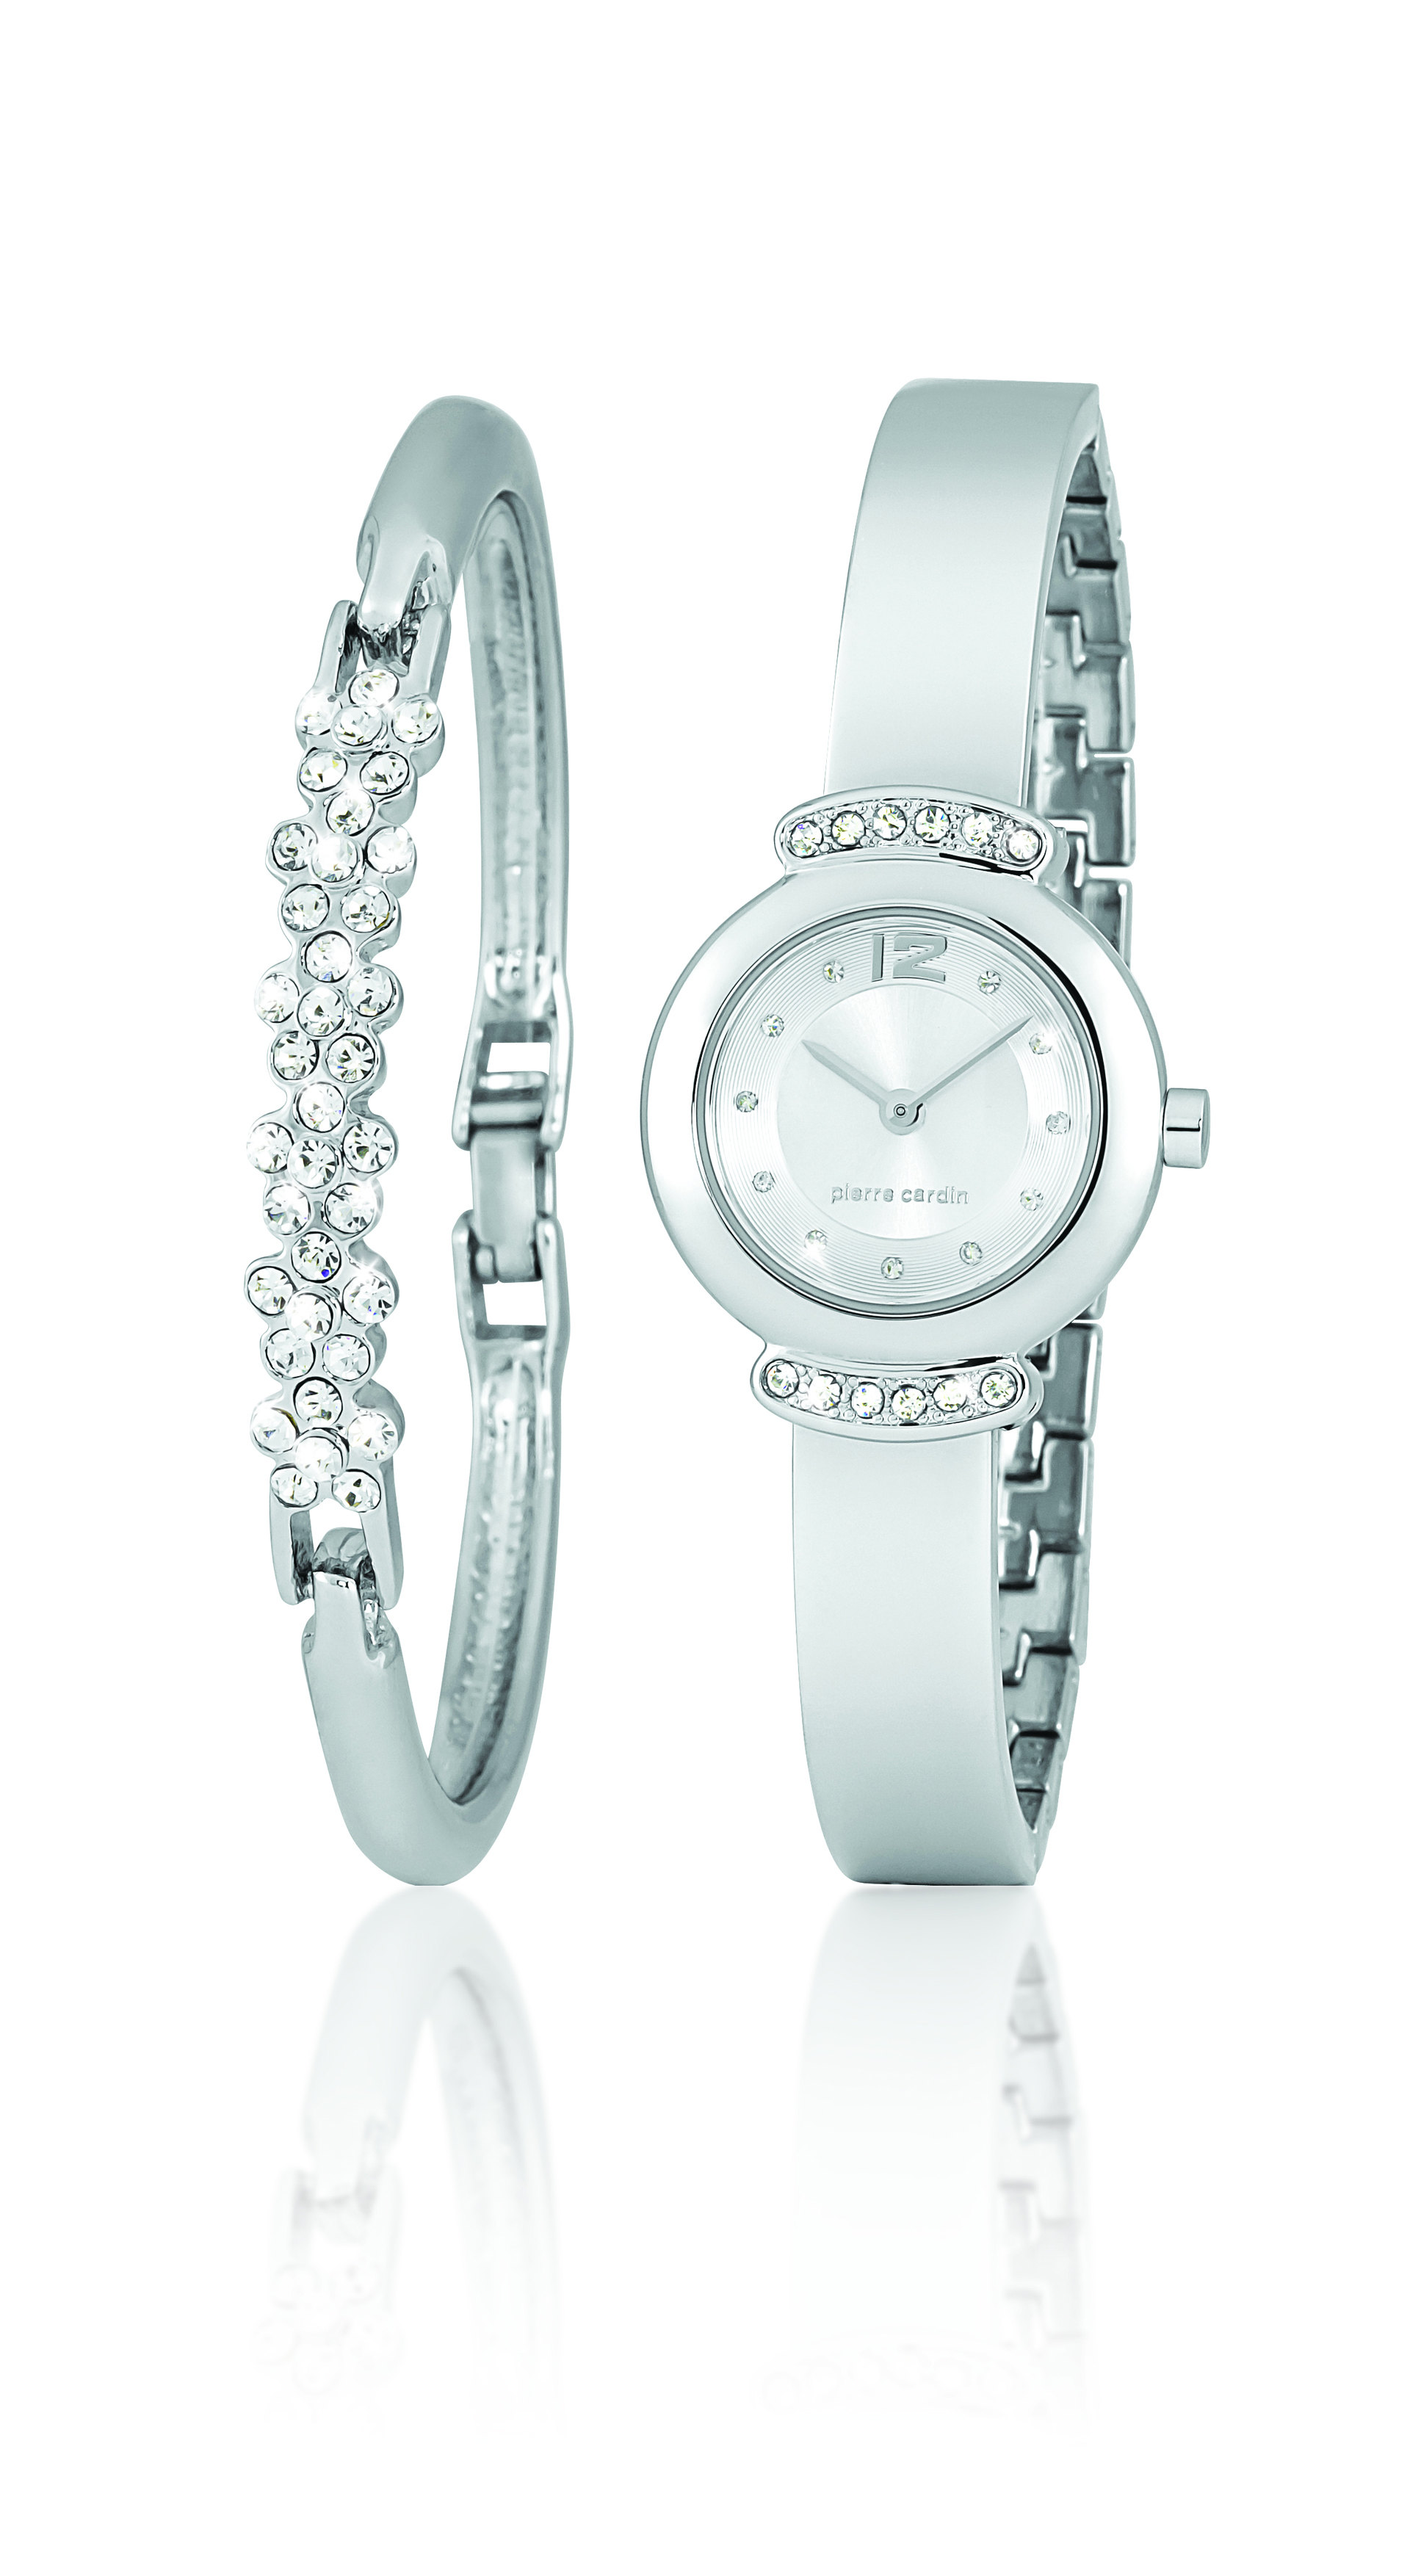 Pierre Cardin dámská sada - hodinky a náramek